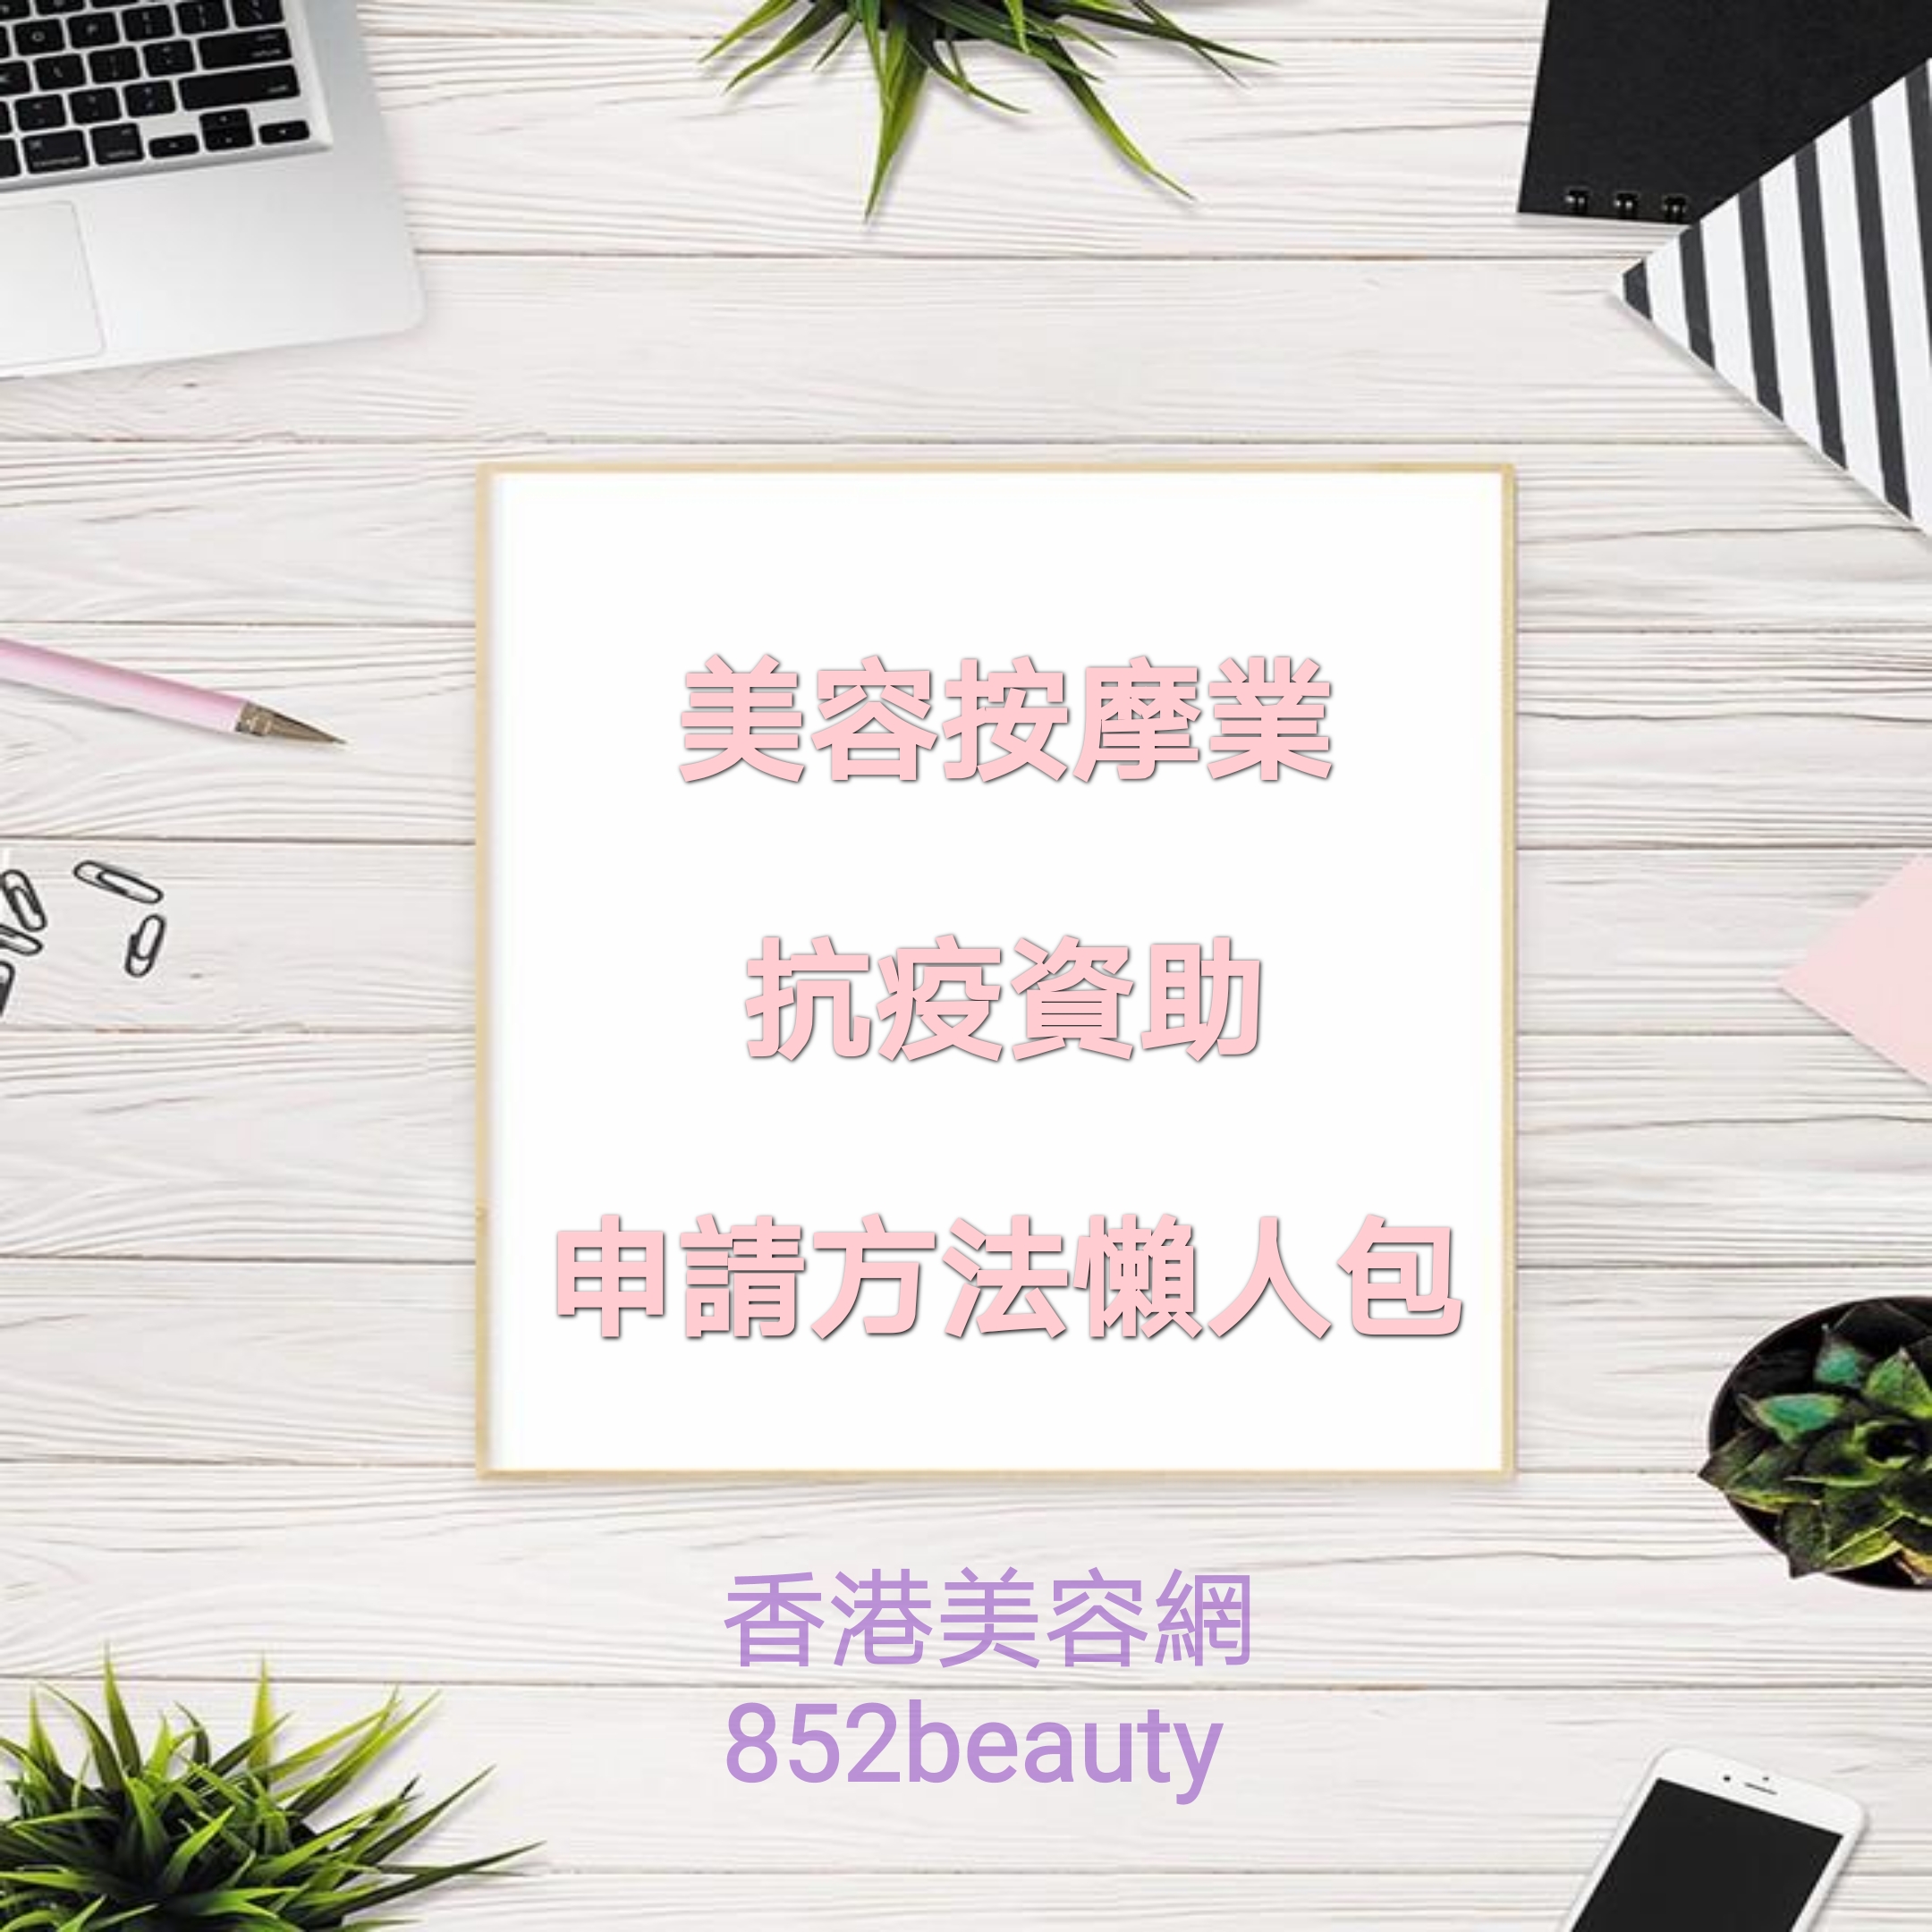 Hong Kong Beauty Salon Latest Beauty News: 【防疫抗疫措施】美容/按摩/美甲業 新一輪資助詳情